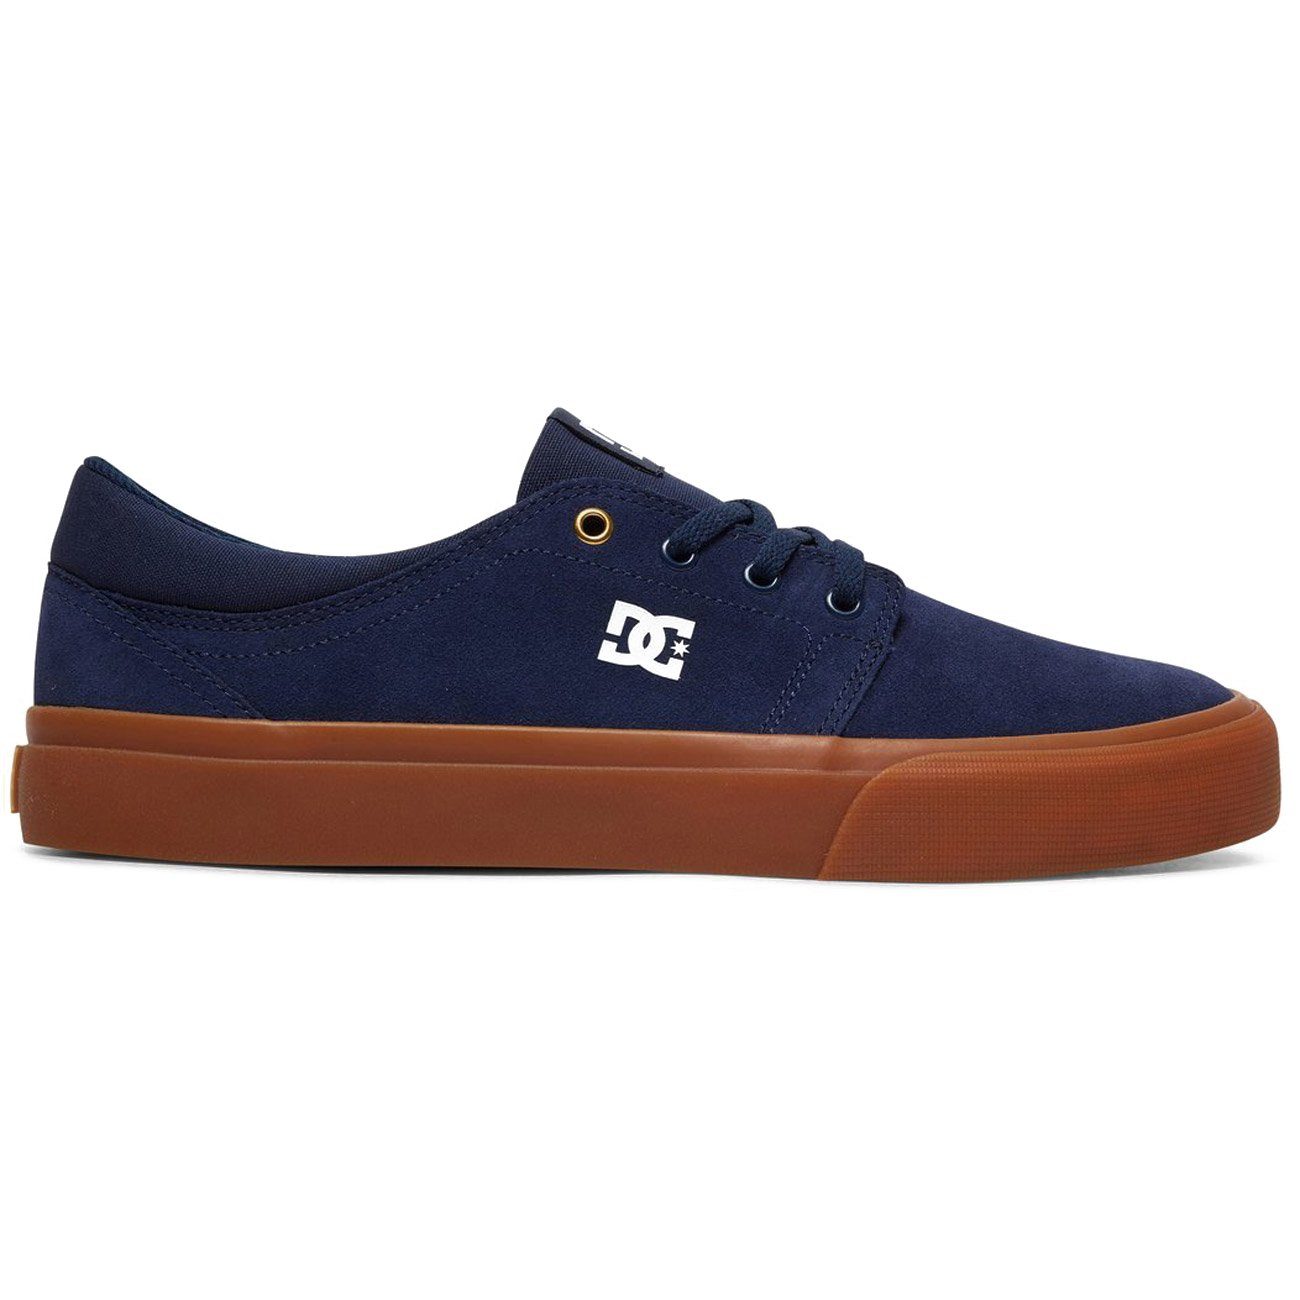 TRASE dgu-dc navy/gum SD DC Sneaker Shoes